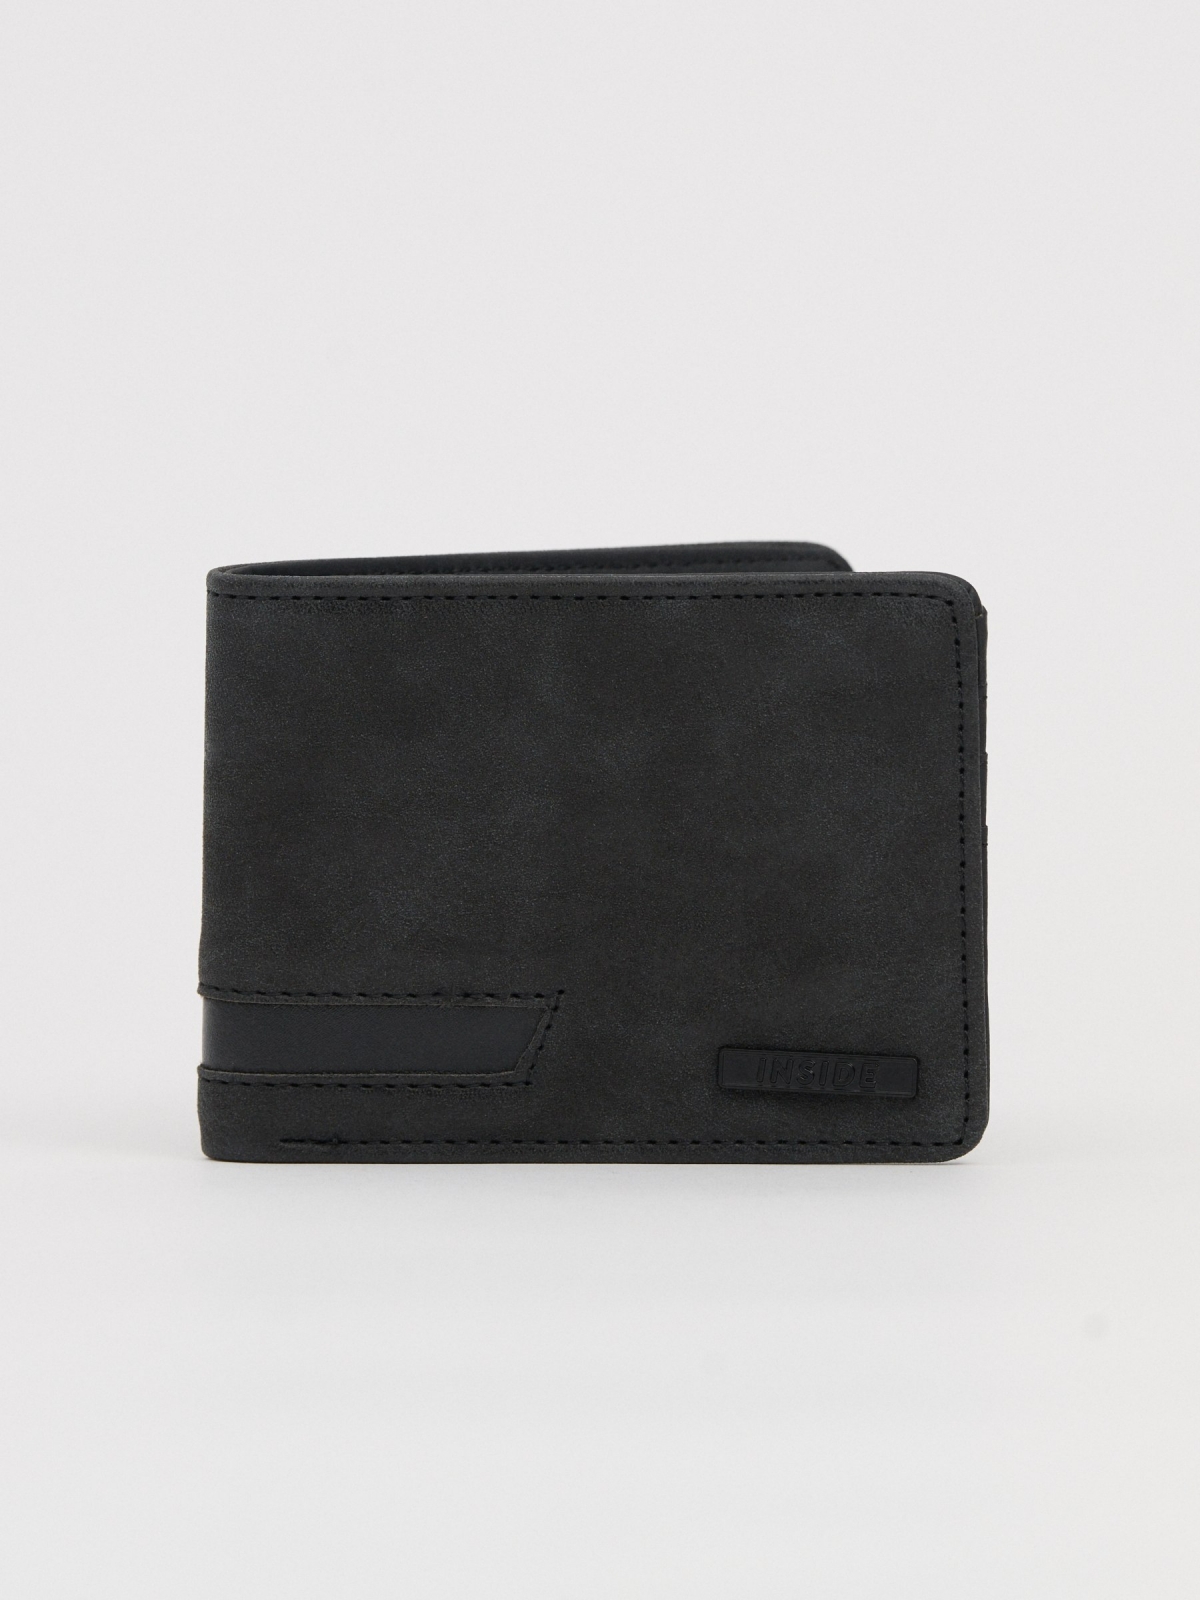 Distressed effect wallet black